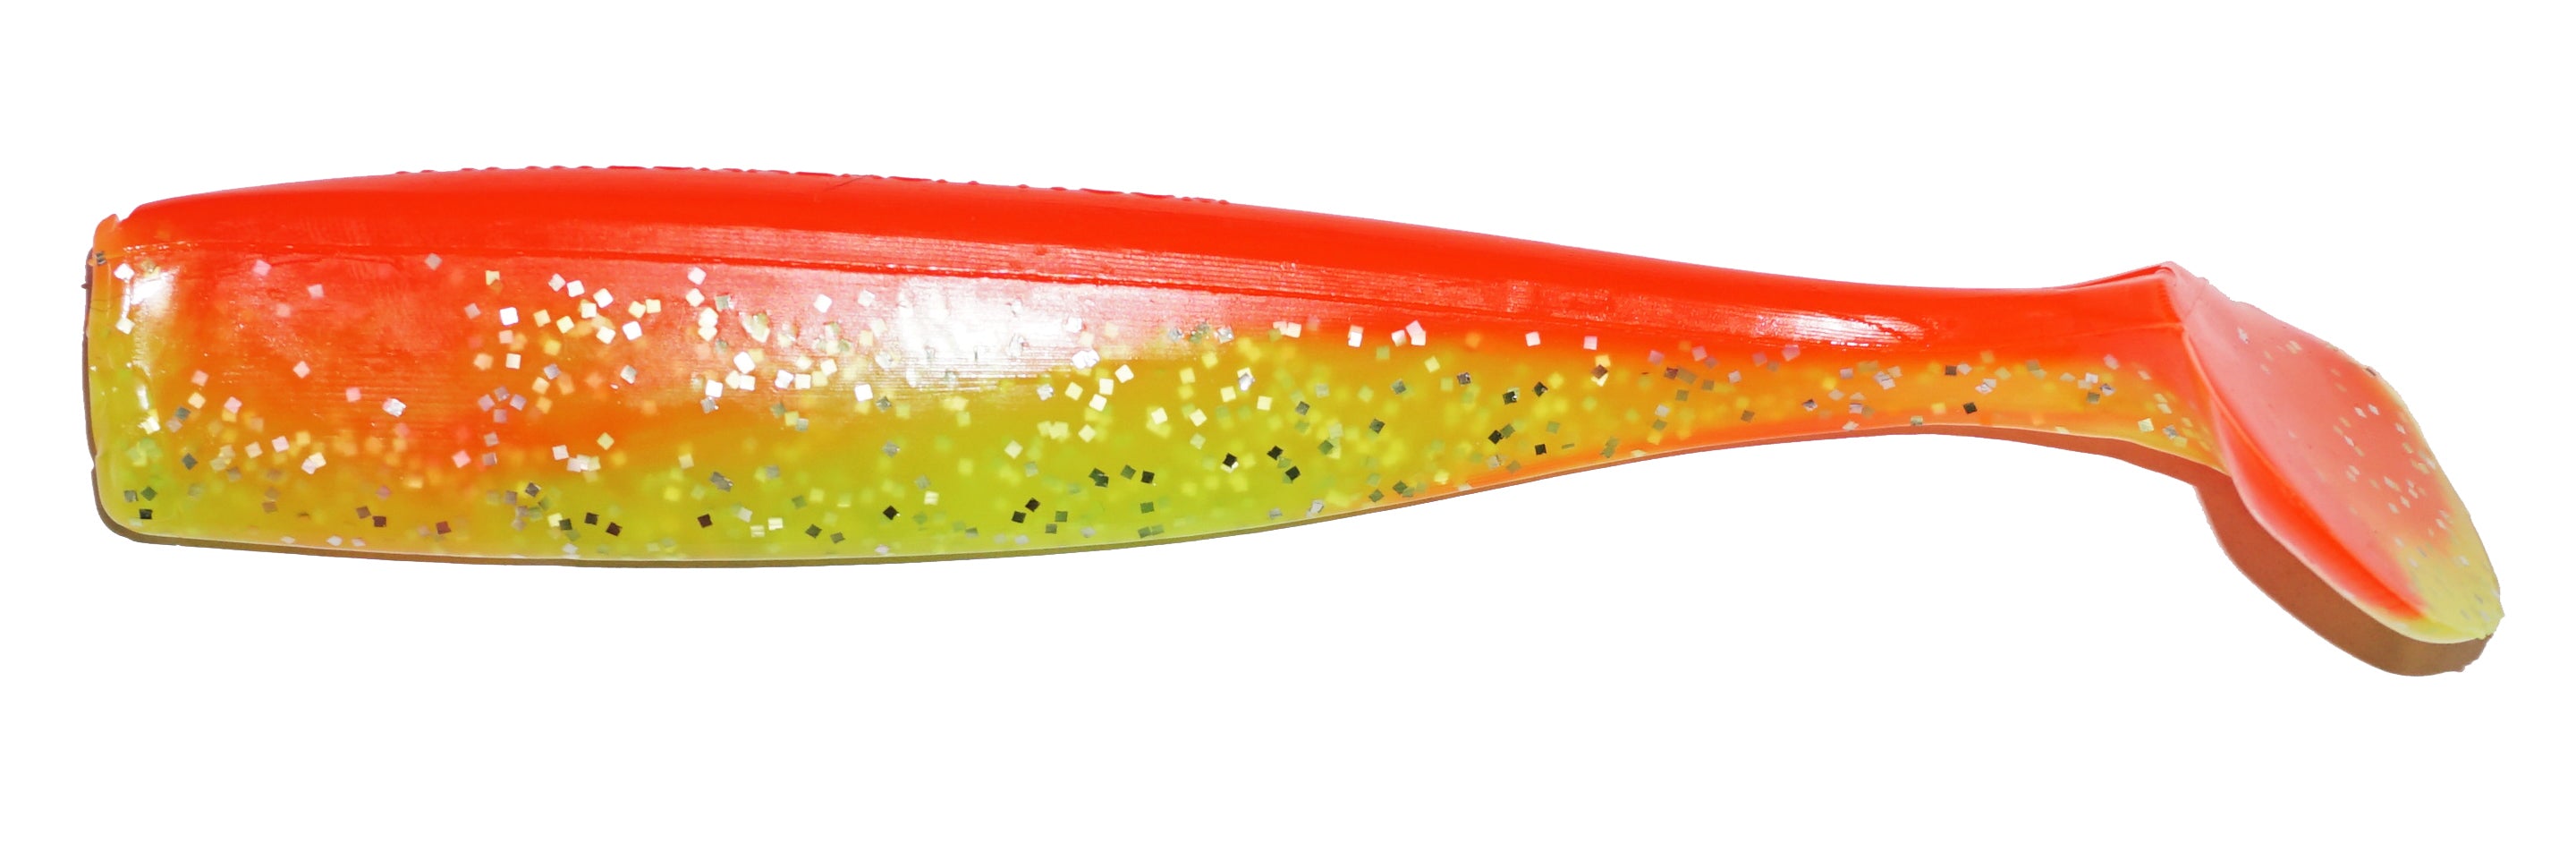 6cm 20pcs grub lure bait soft rubber silica worm lure fishing